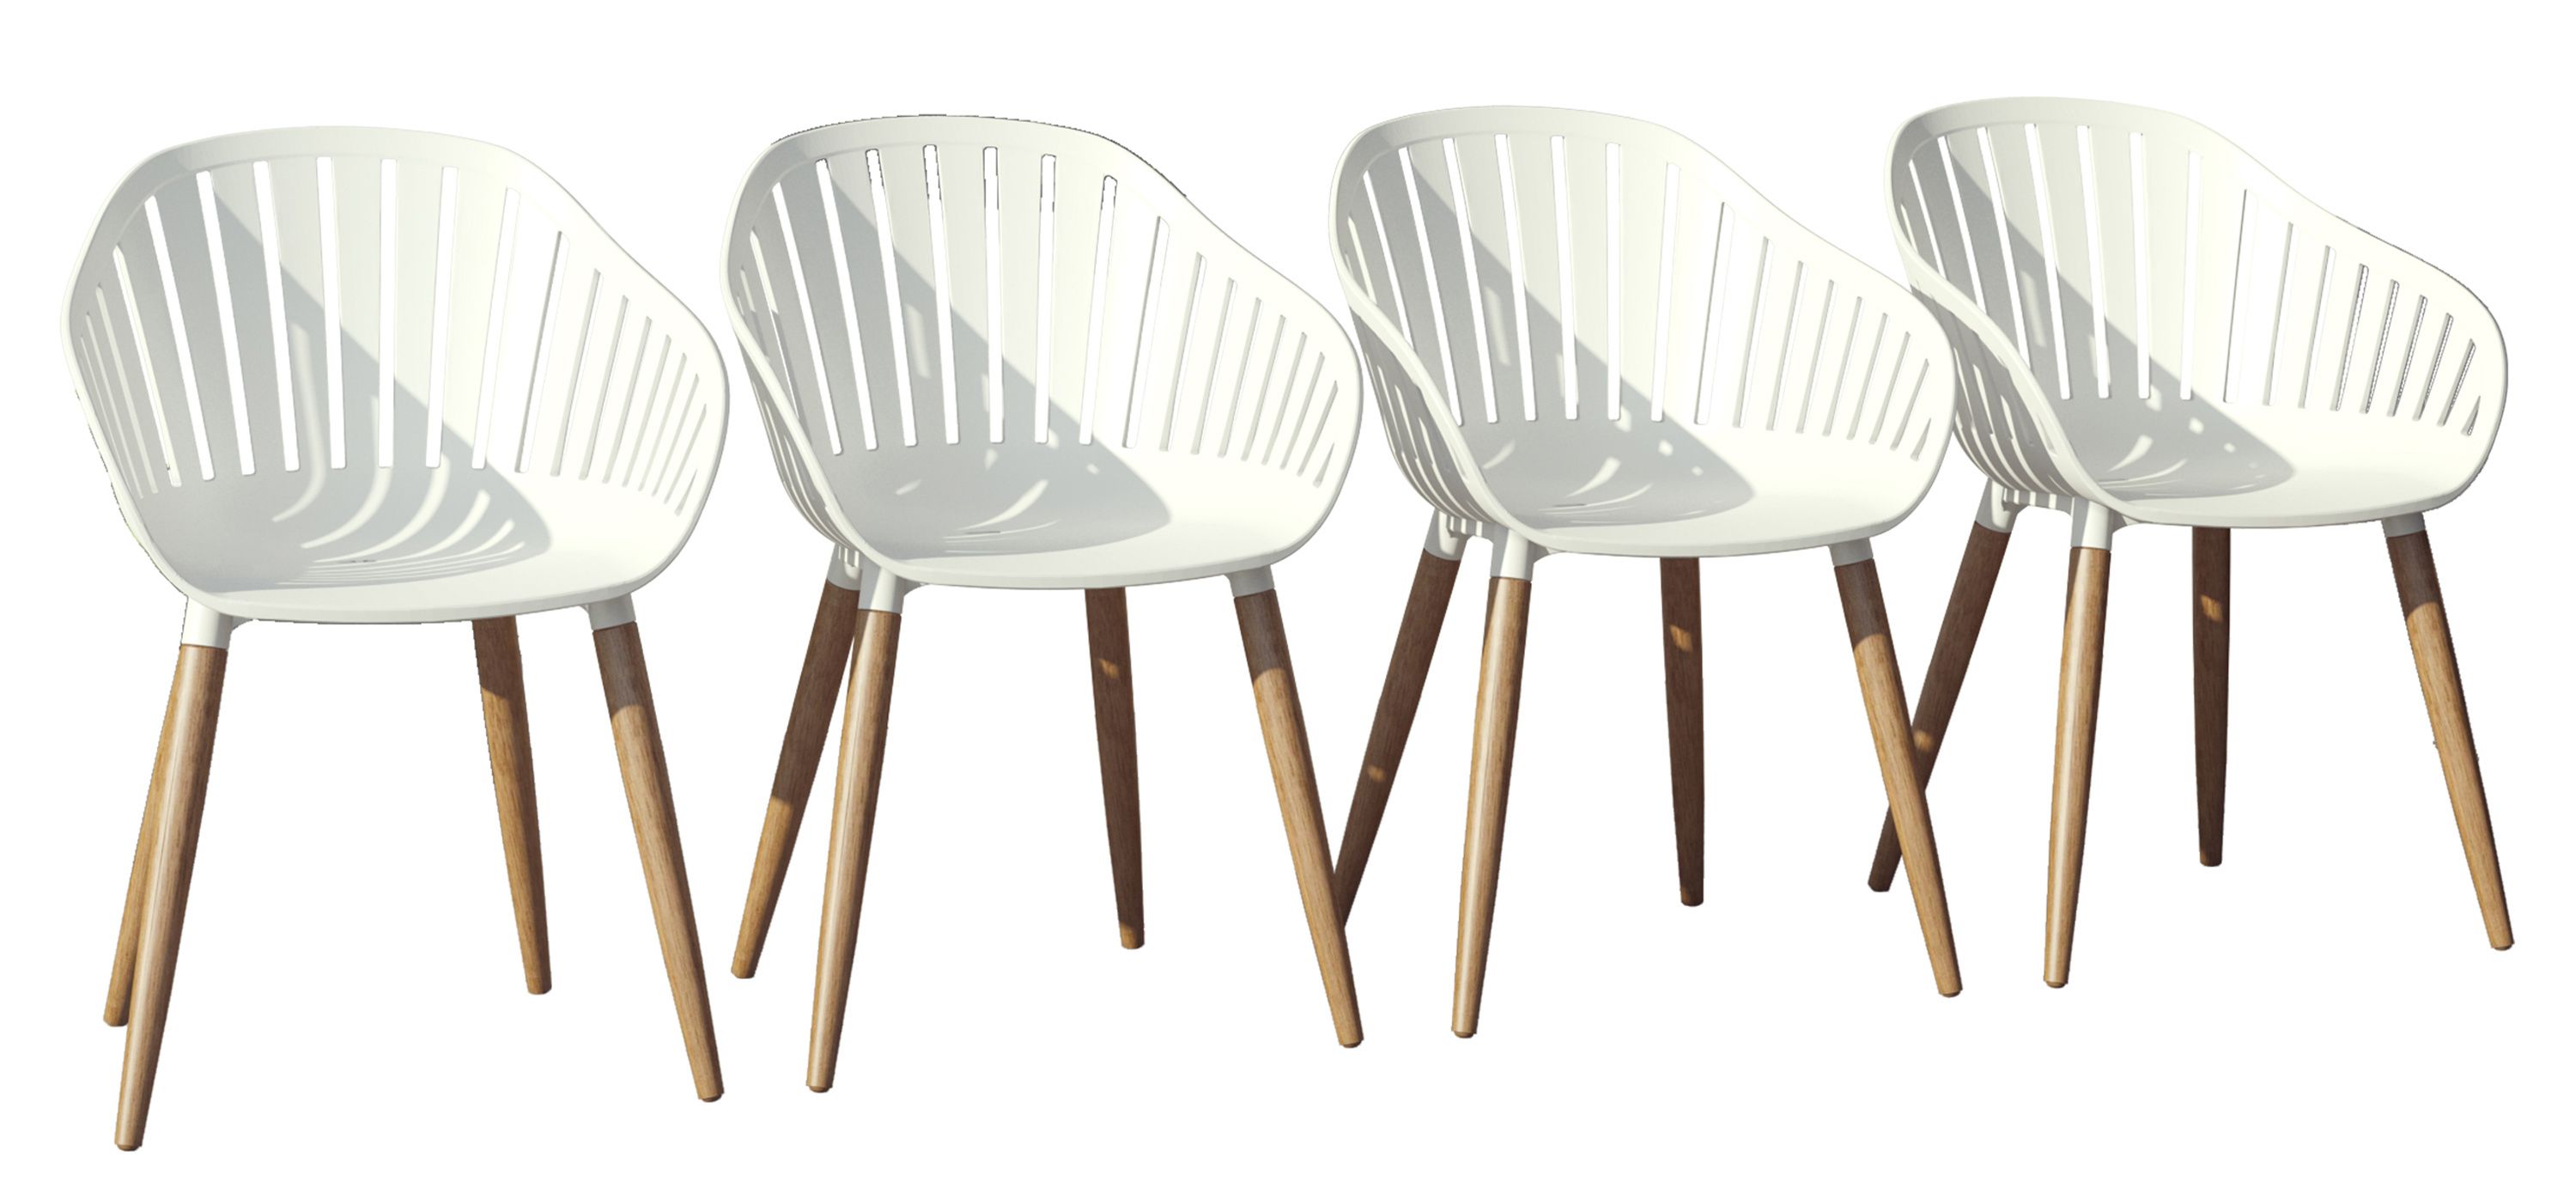 Amazonia Outdoor Eucalyptus Dining Chair - Set of 4